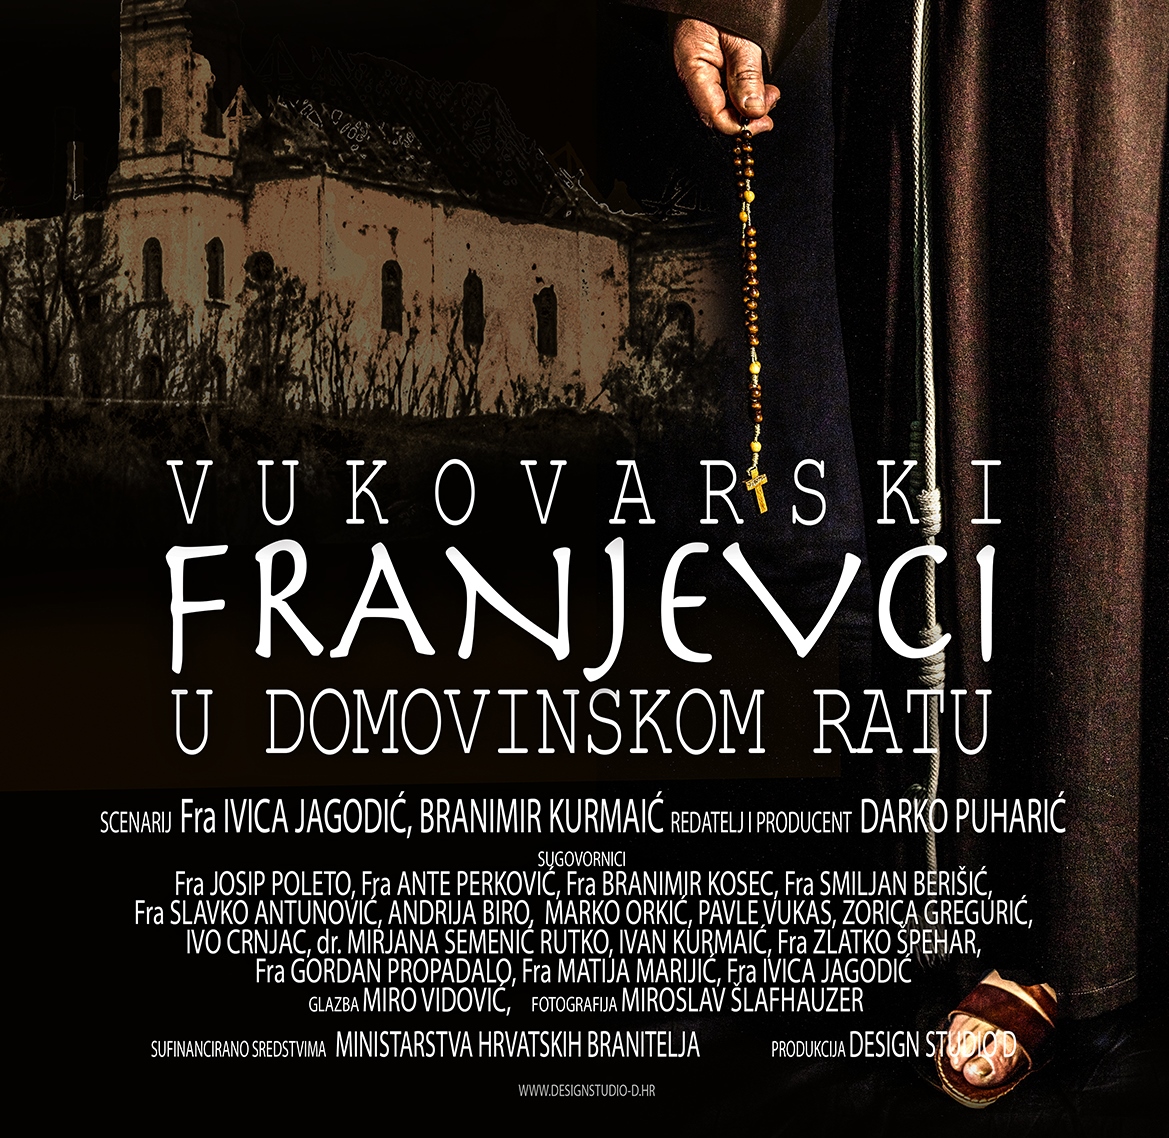 Film “Vukovarski franjevci u Domovinskom ratu”